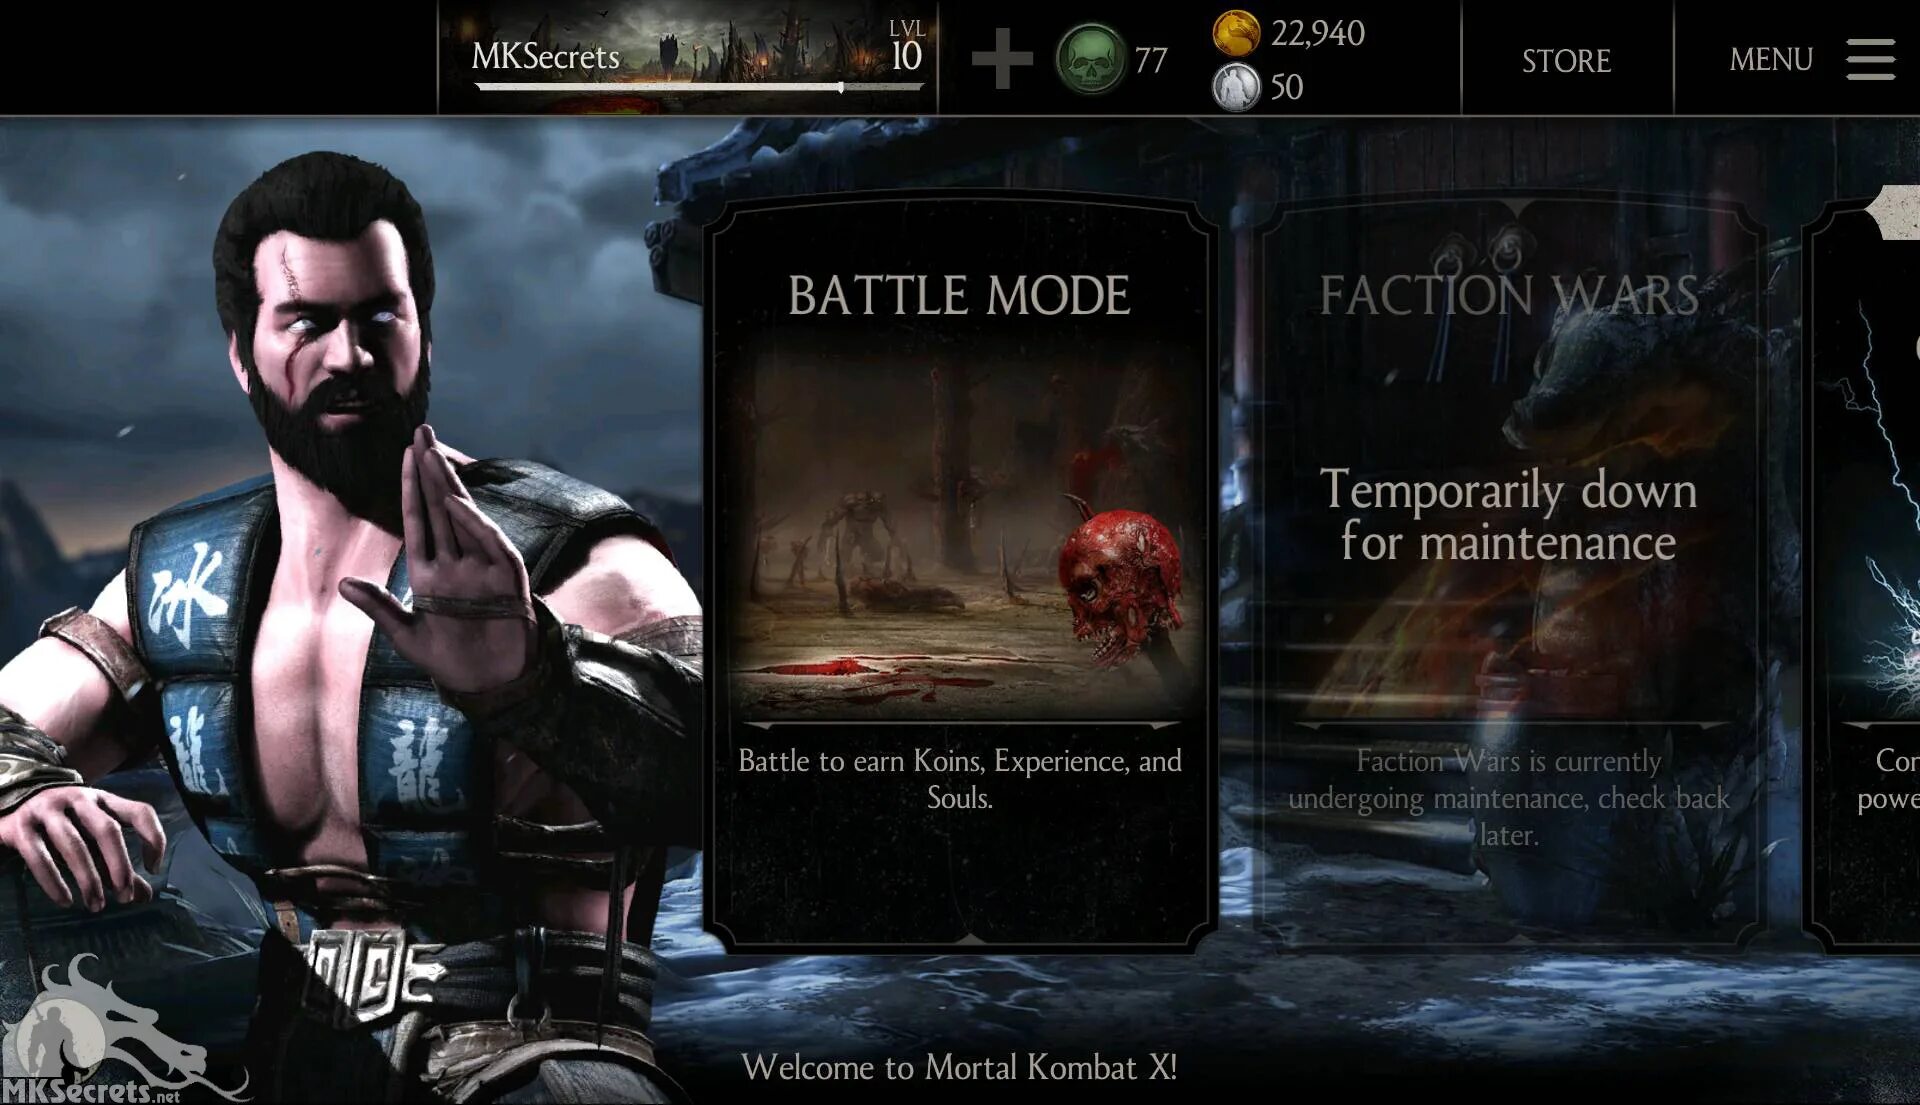 Мортал комбат мобайл играть. Меню мортал комбат 10. Mortal Kombat x mobile версия 1.1.0. МК Х мобайл. Mortal Kombat 10 главное меню.